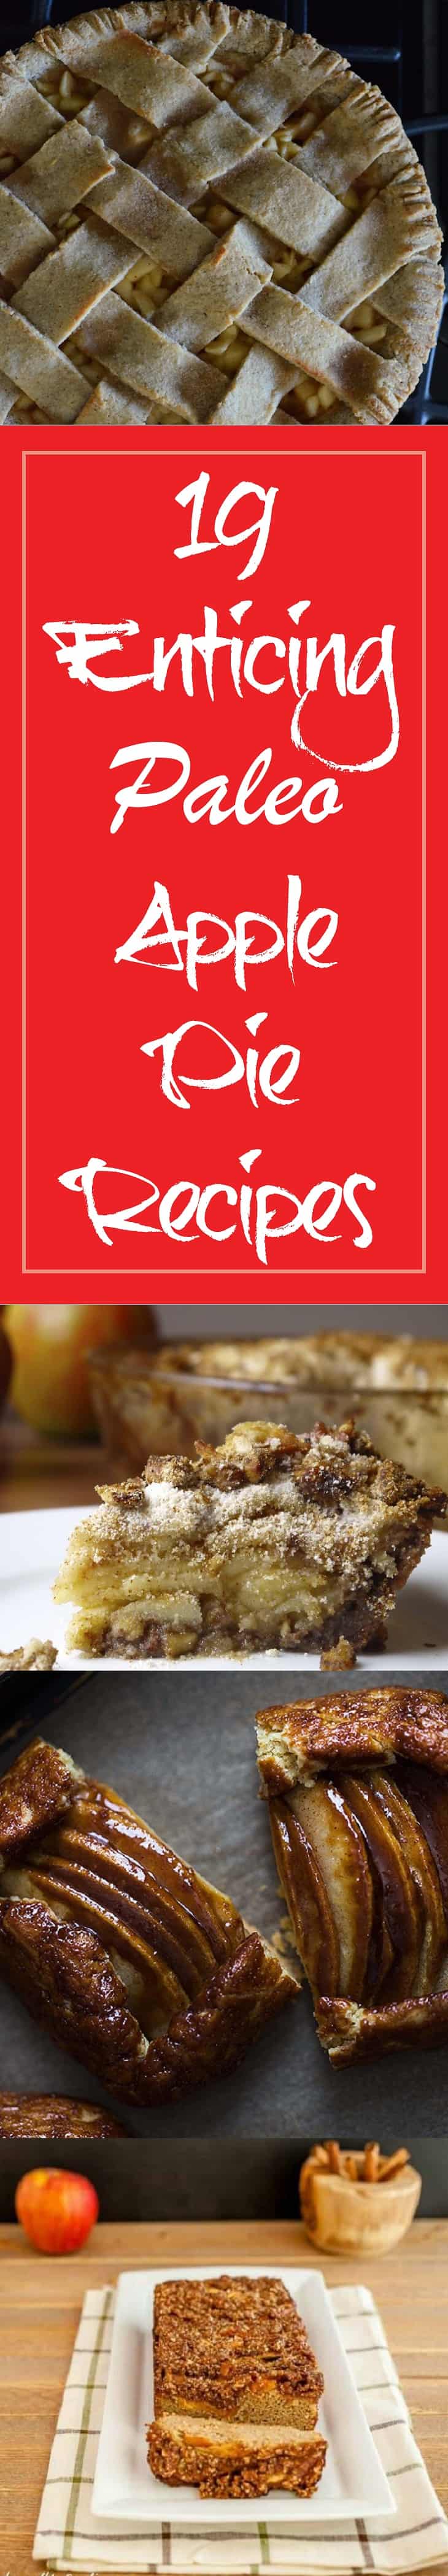 Paleo Apple Pie Recipes  #paleo - https://paleoflourish.com/paleo-apple-pie-recipes/